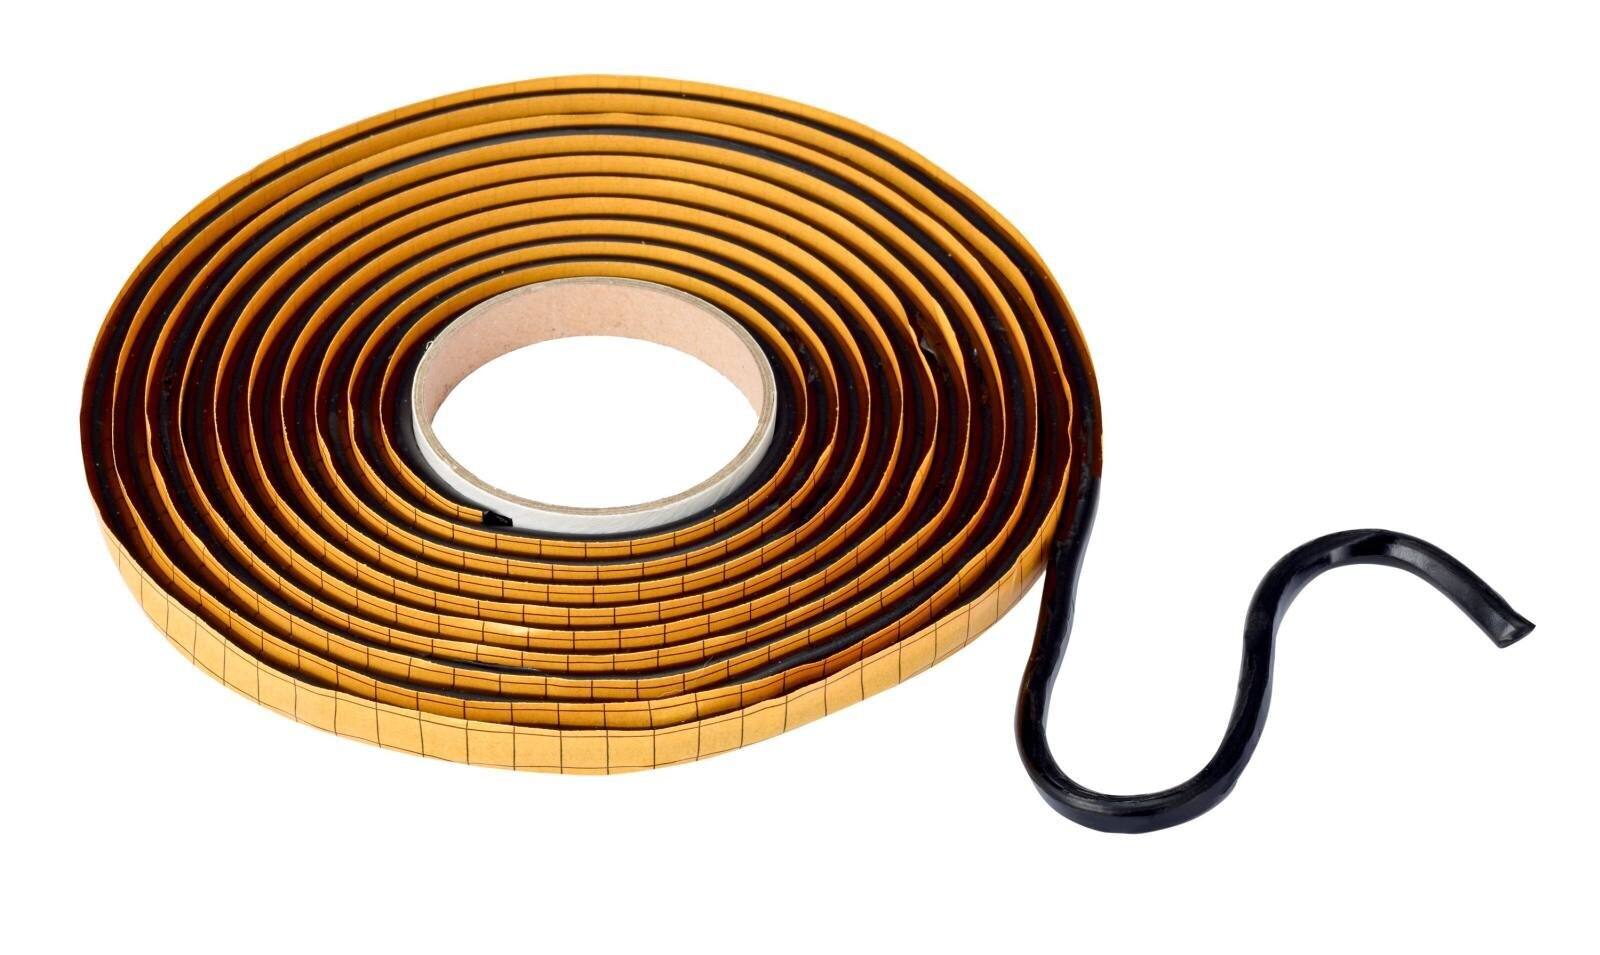 3M Scotch-Weld round cord based on butyl rubber 5313, black, diameter 4 mm x 11 m